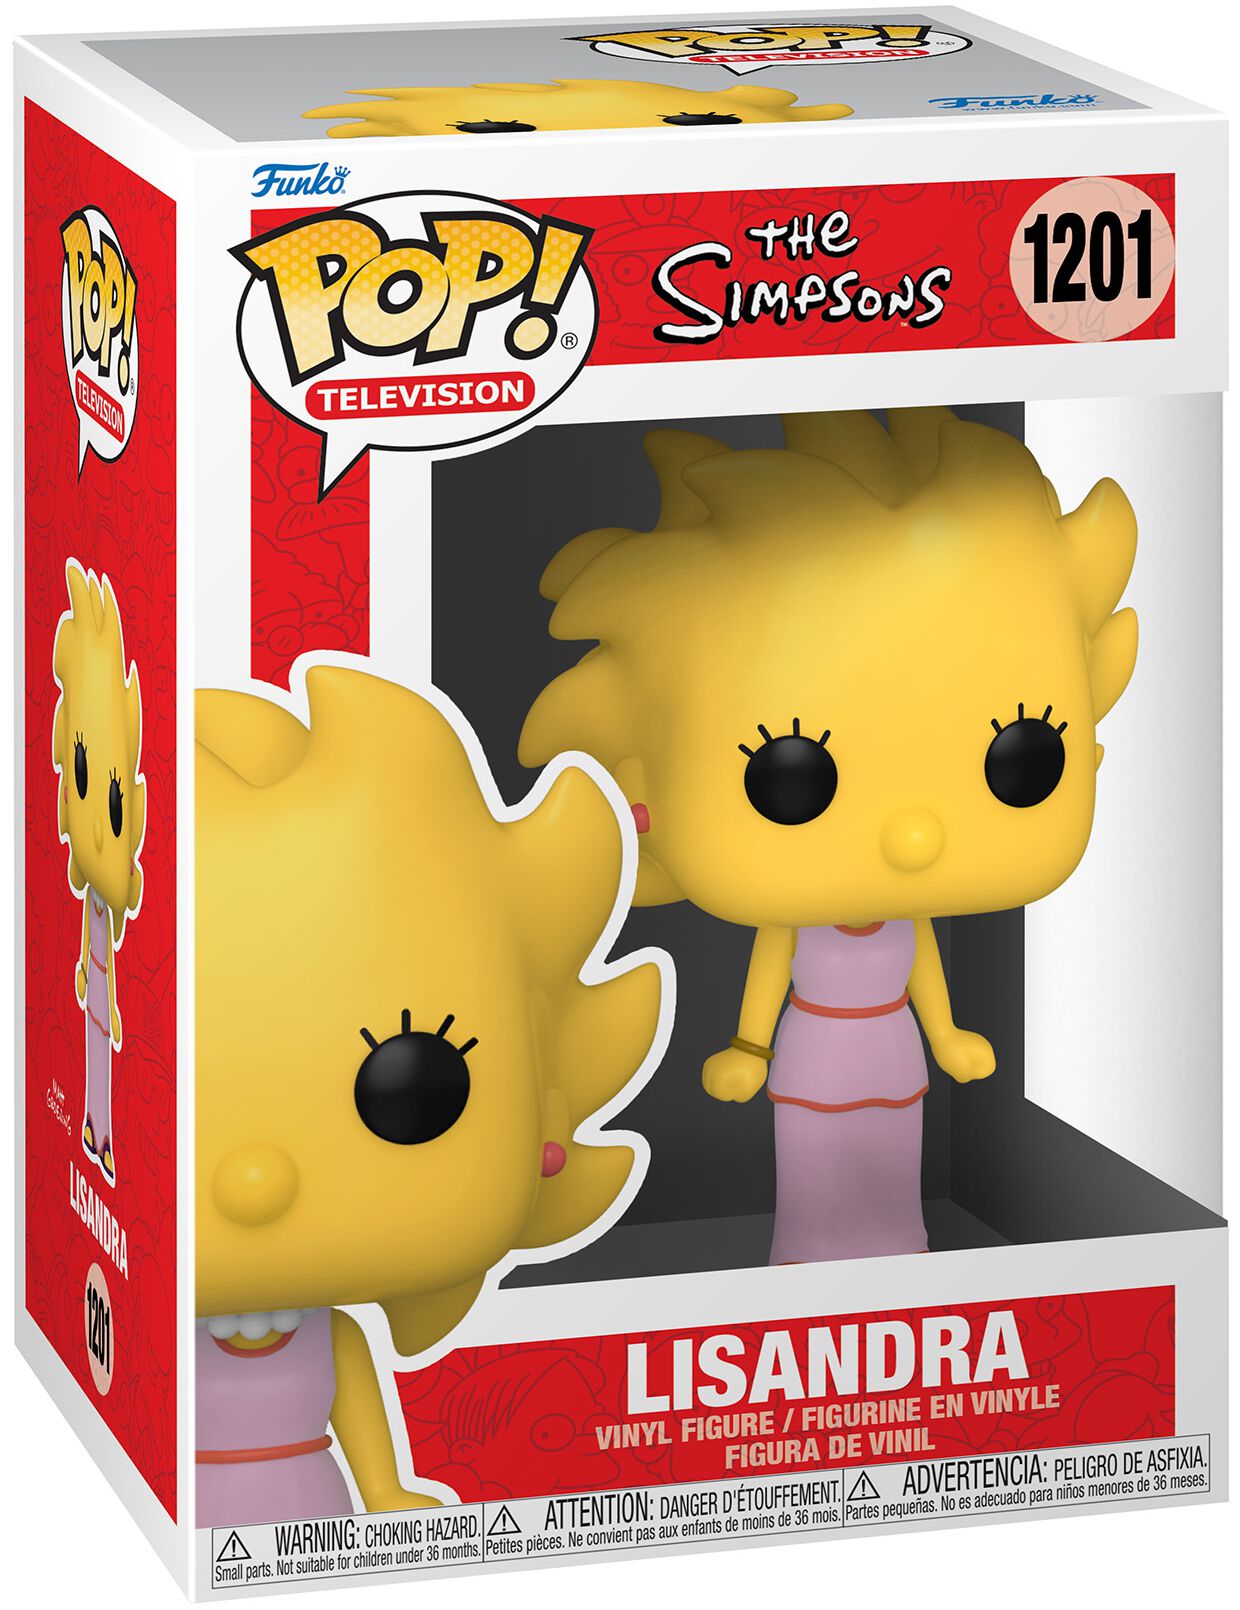 The Simpsons Lisandra Vinyl Figure 1201 Funko Pop! multicolor